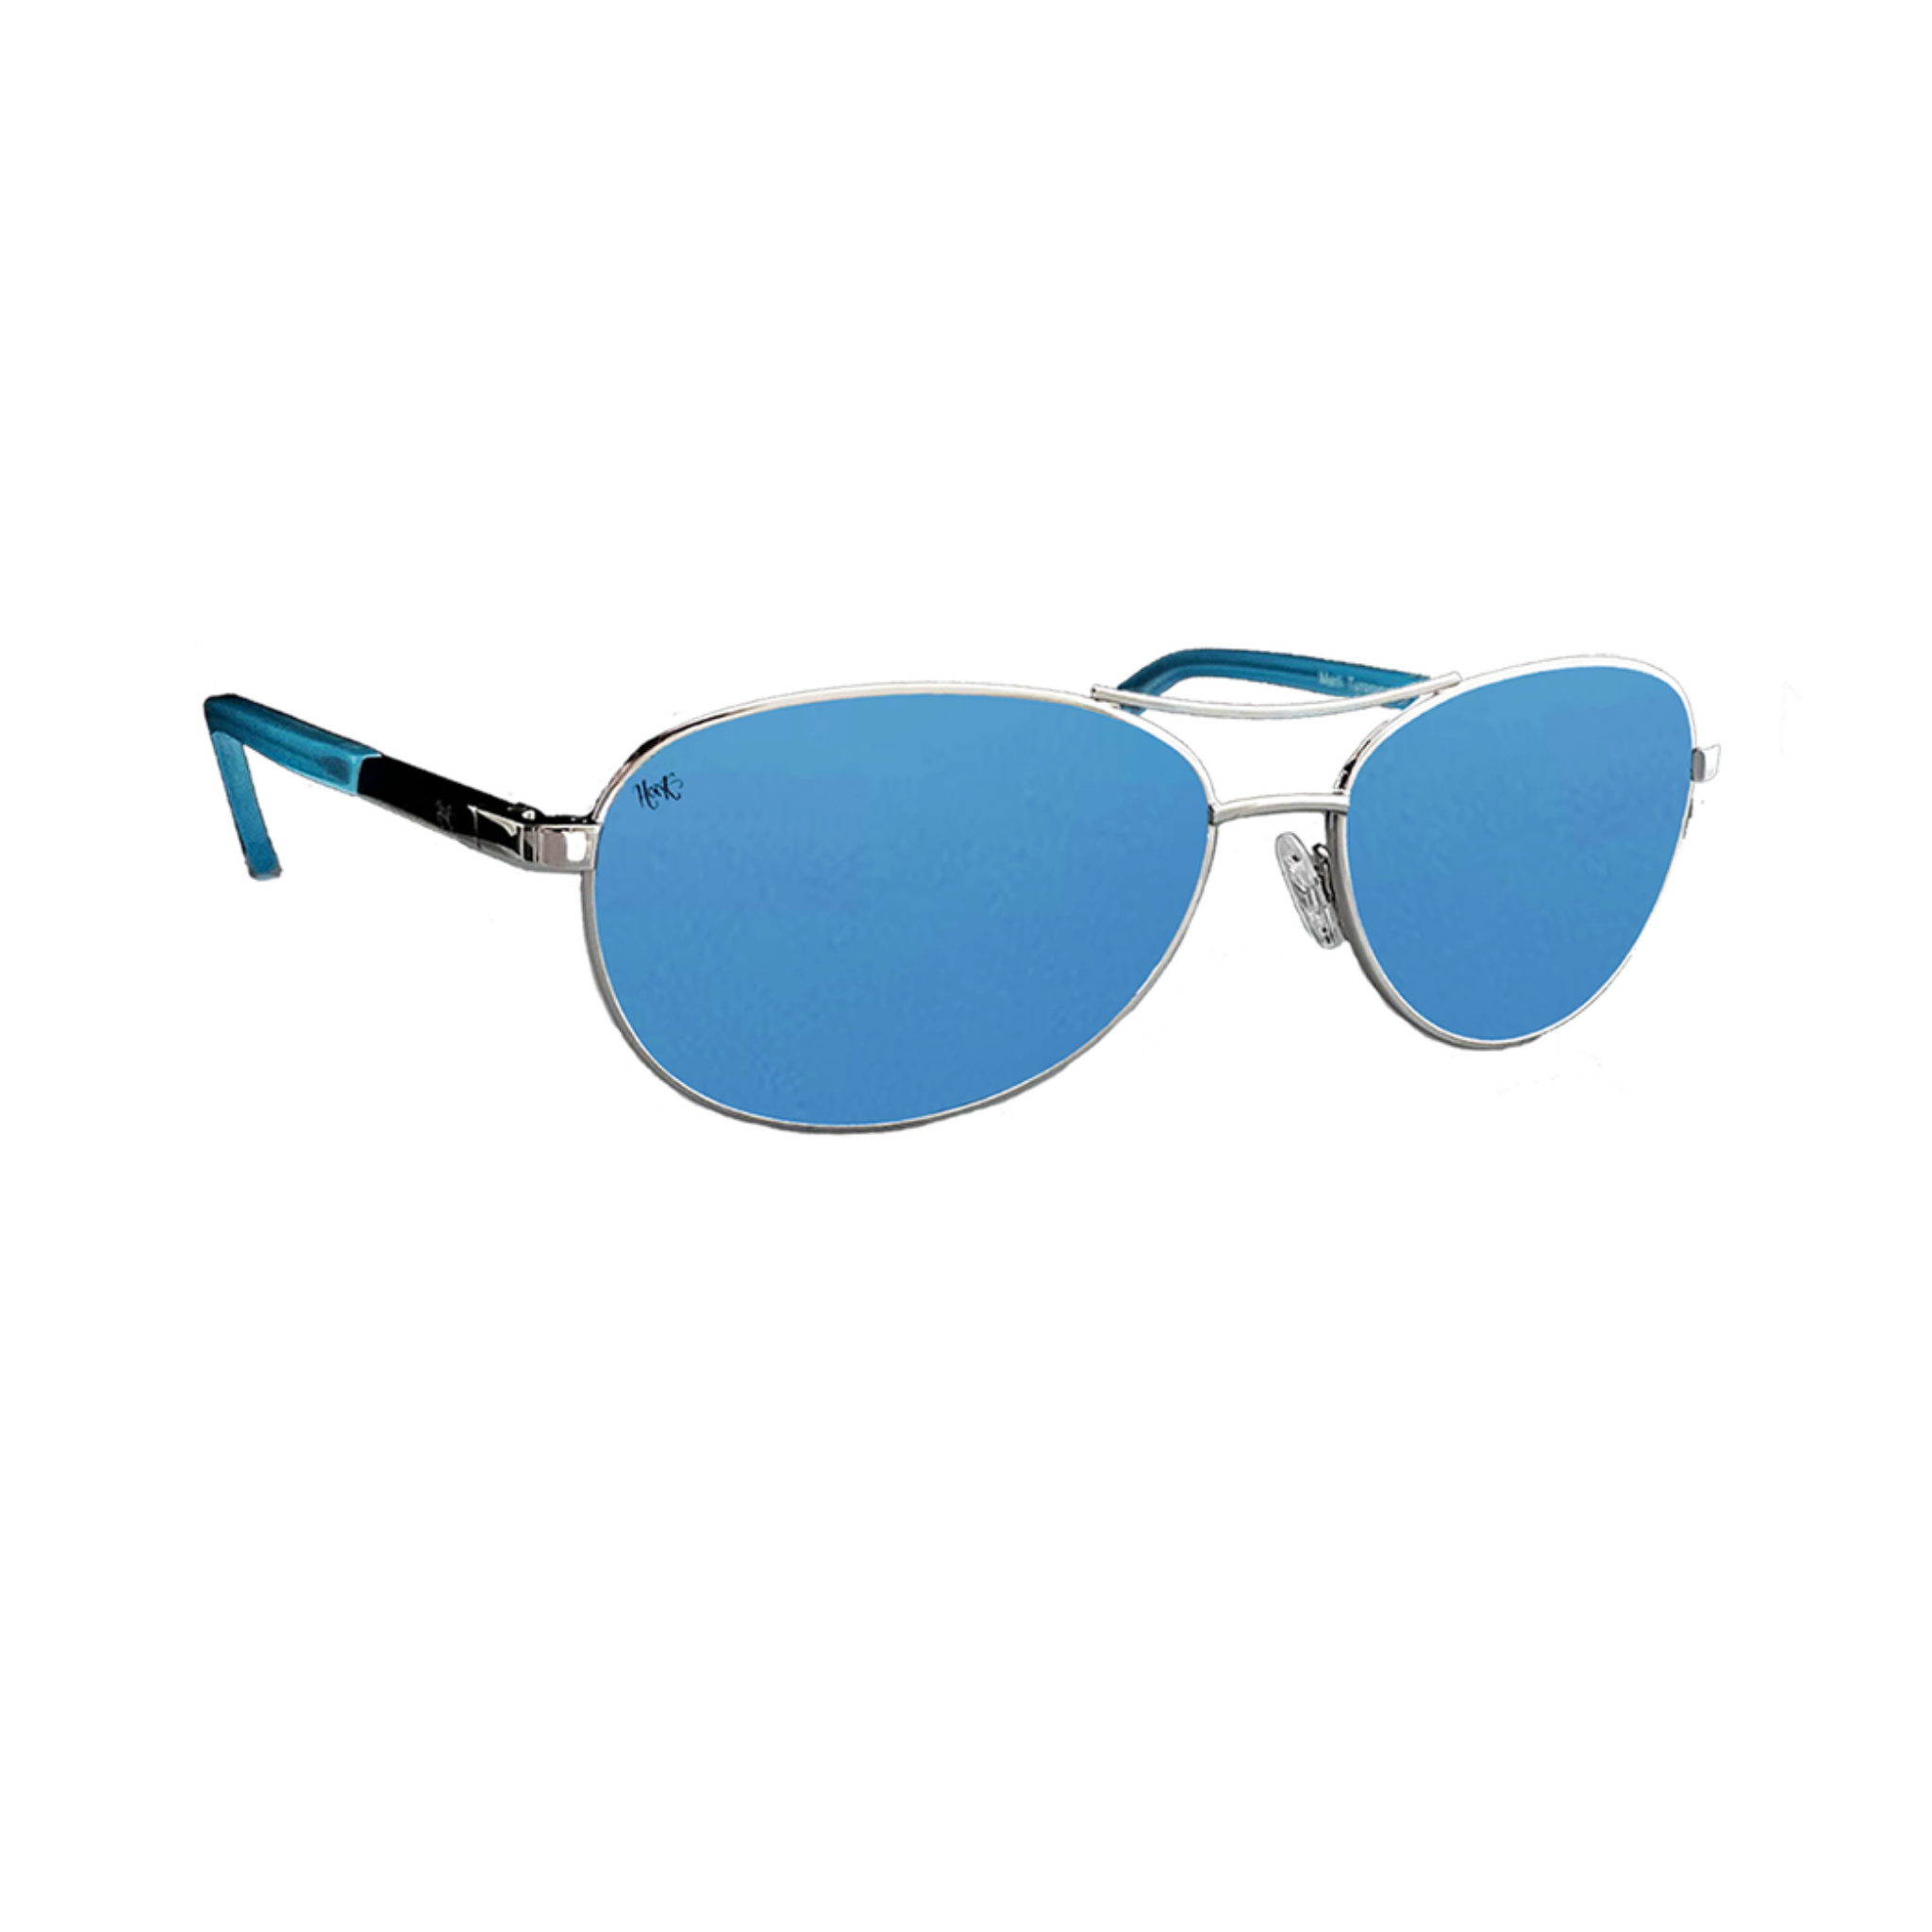 MARLI Sunglasses by Hook Optics | Polarized Aviator Sunglasses